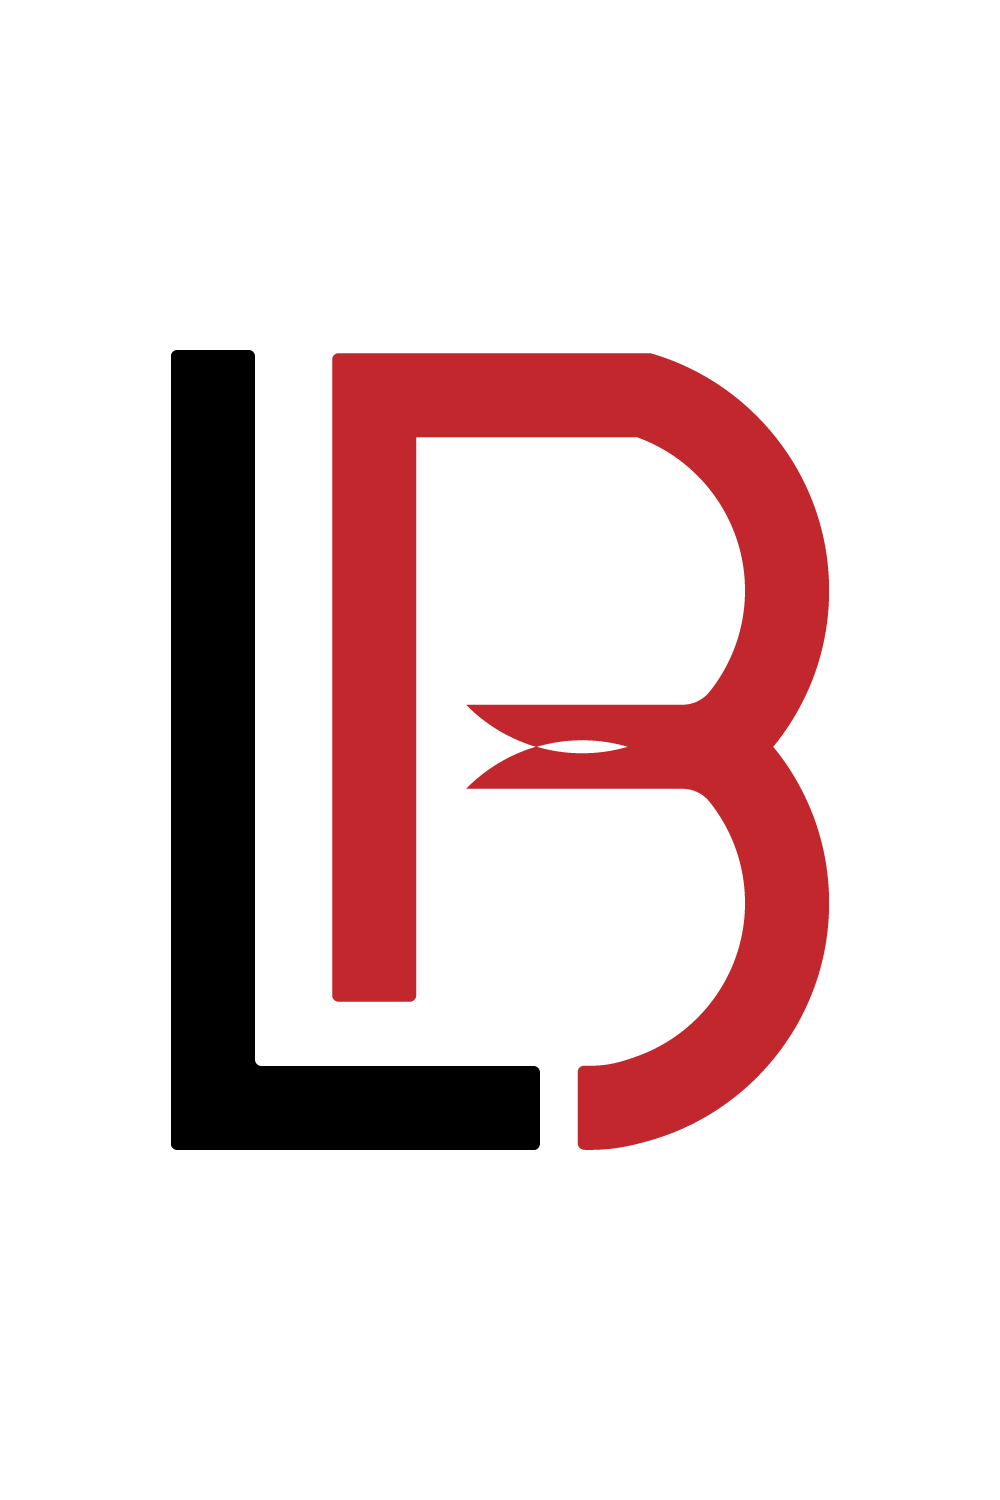 Initials LB letters logo design vector images LB logo design red and black color icon BL logo design best identity pinterest preview image.